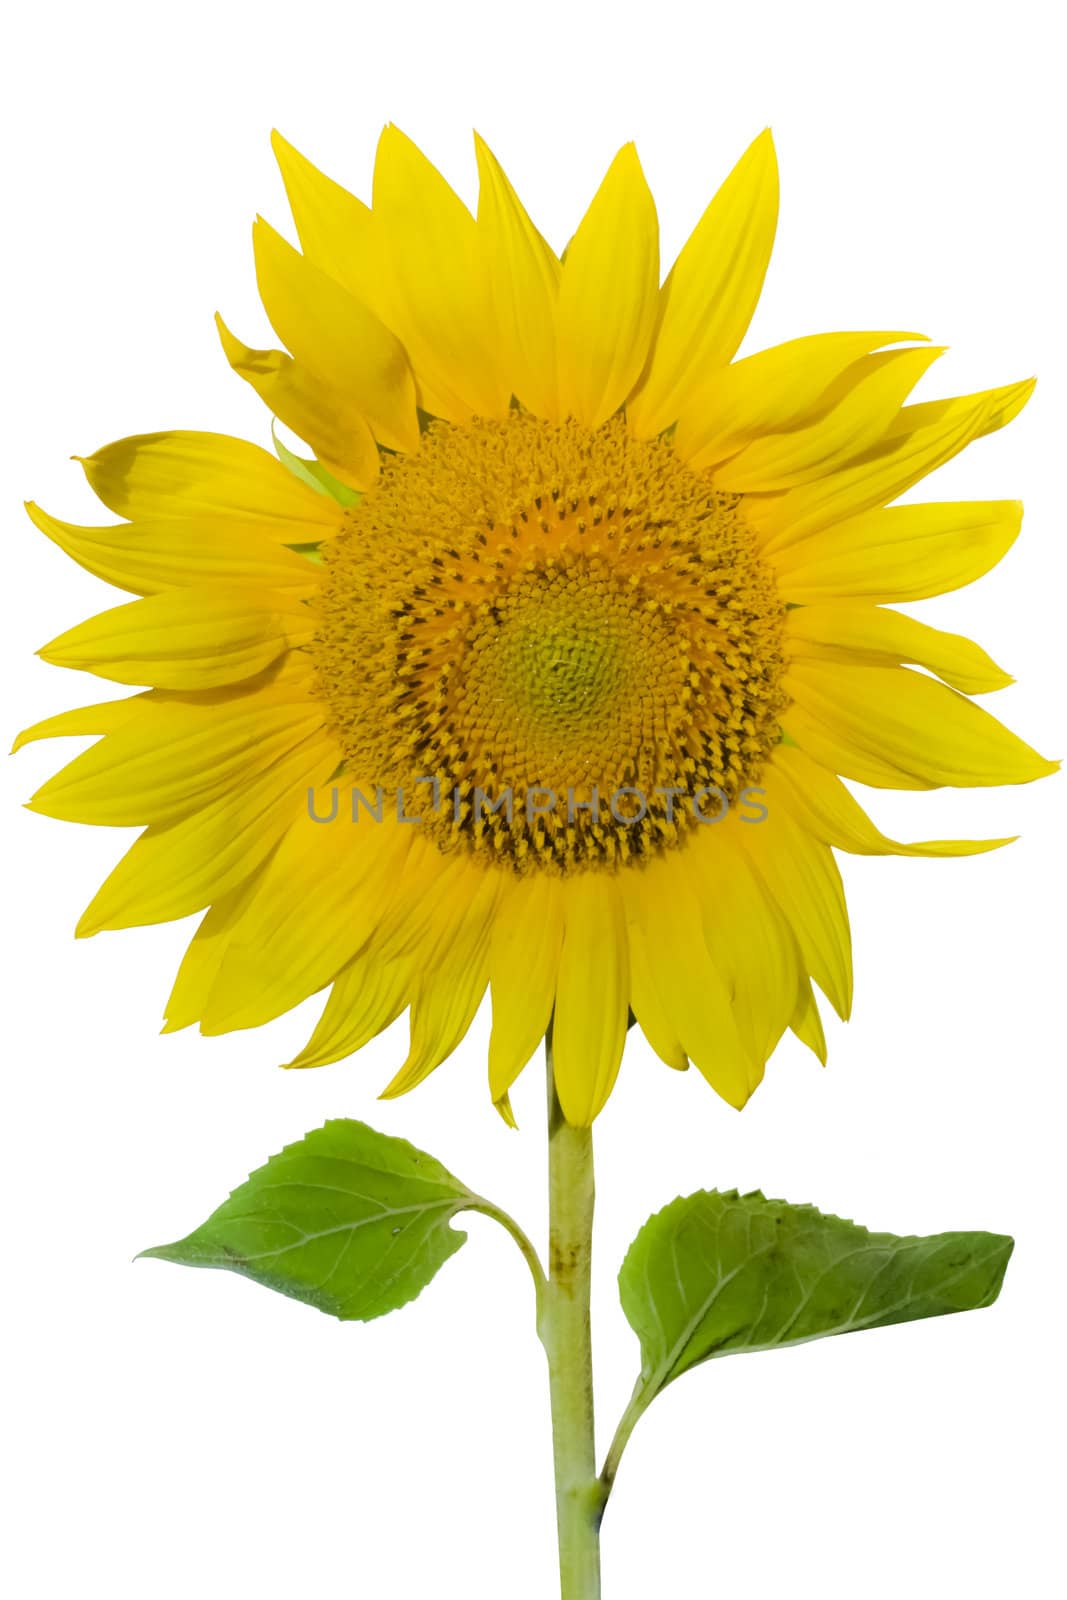 sunflower on white